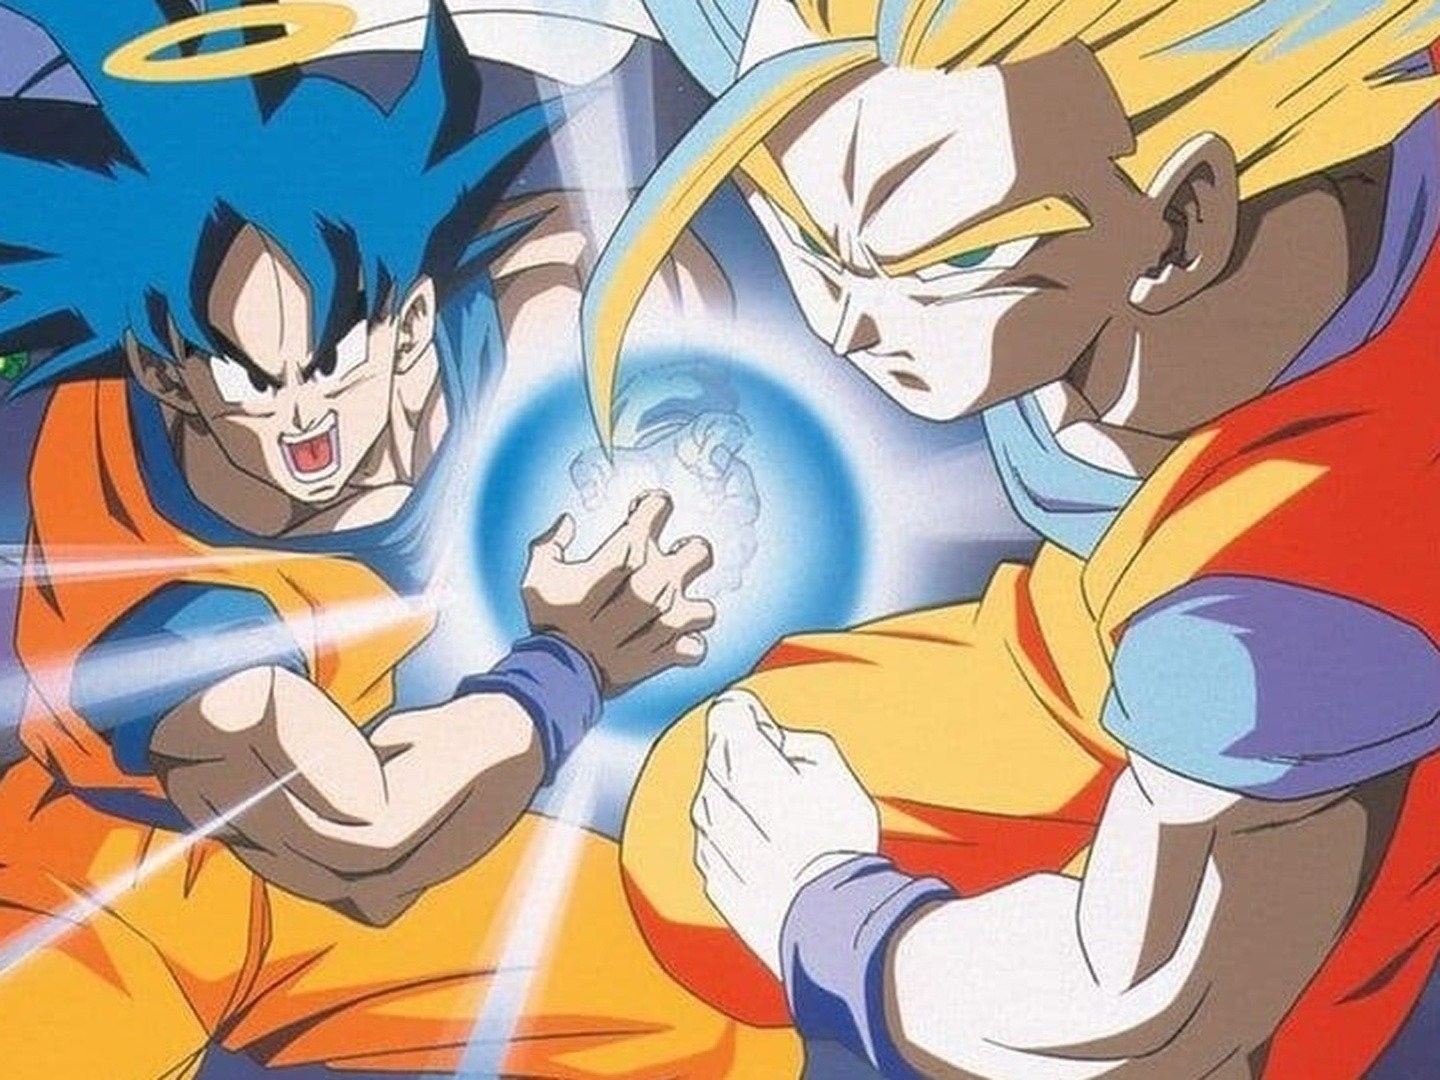 Lemming Ball Z Goku vs Bojack Weirdest Dragon Ball Z Game Ever!